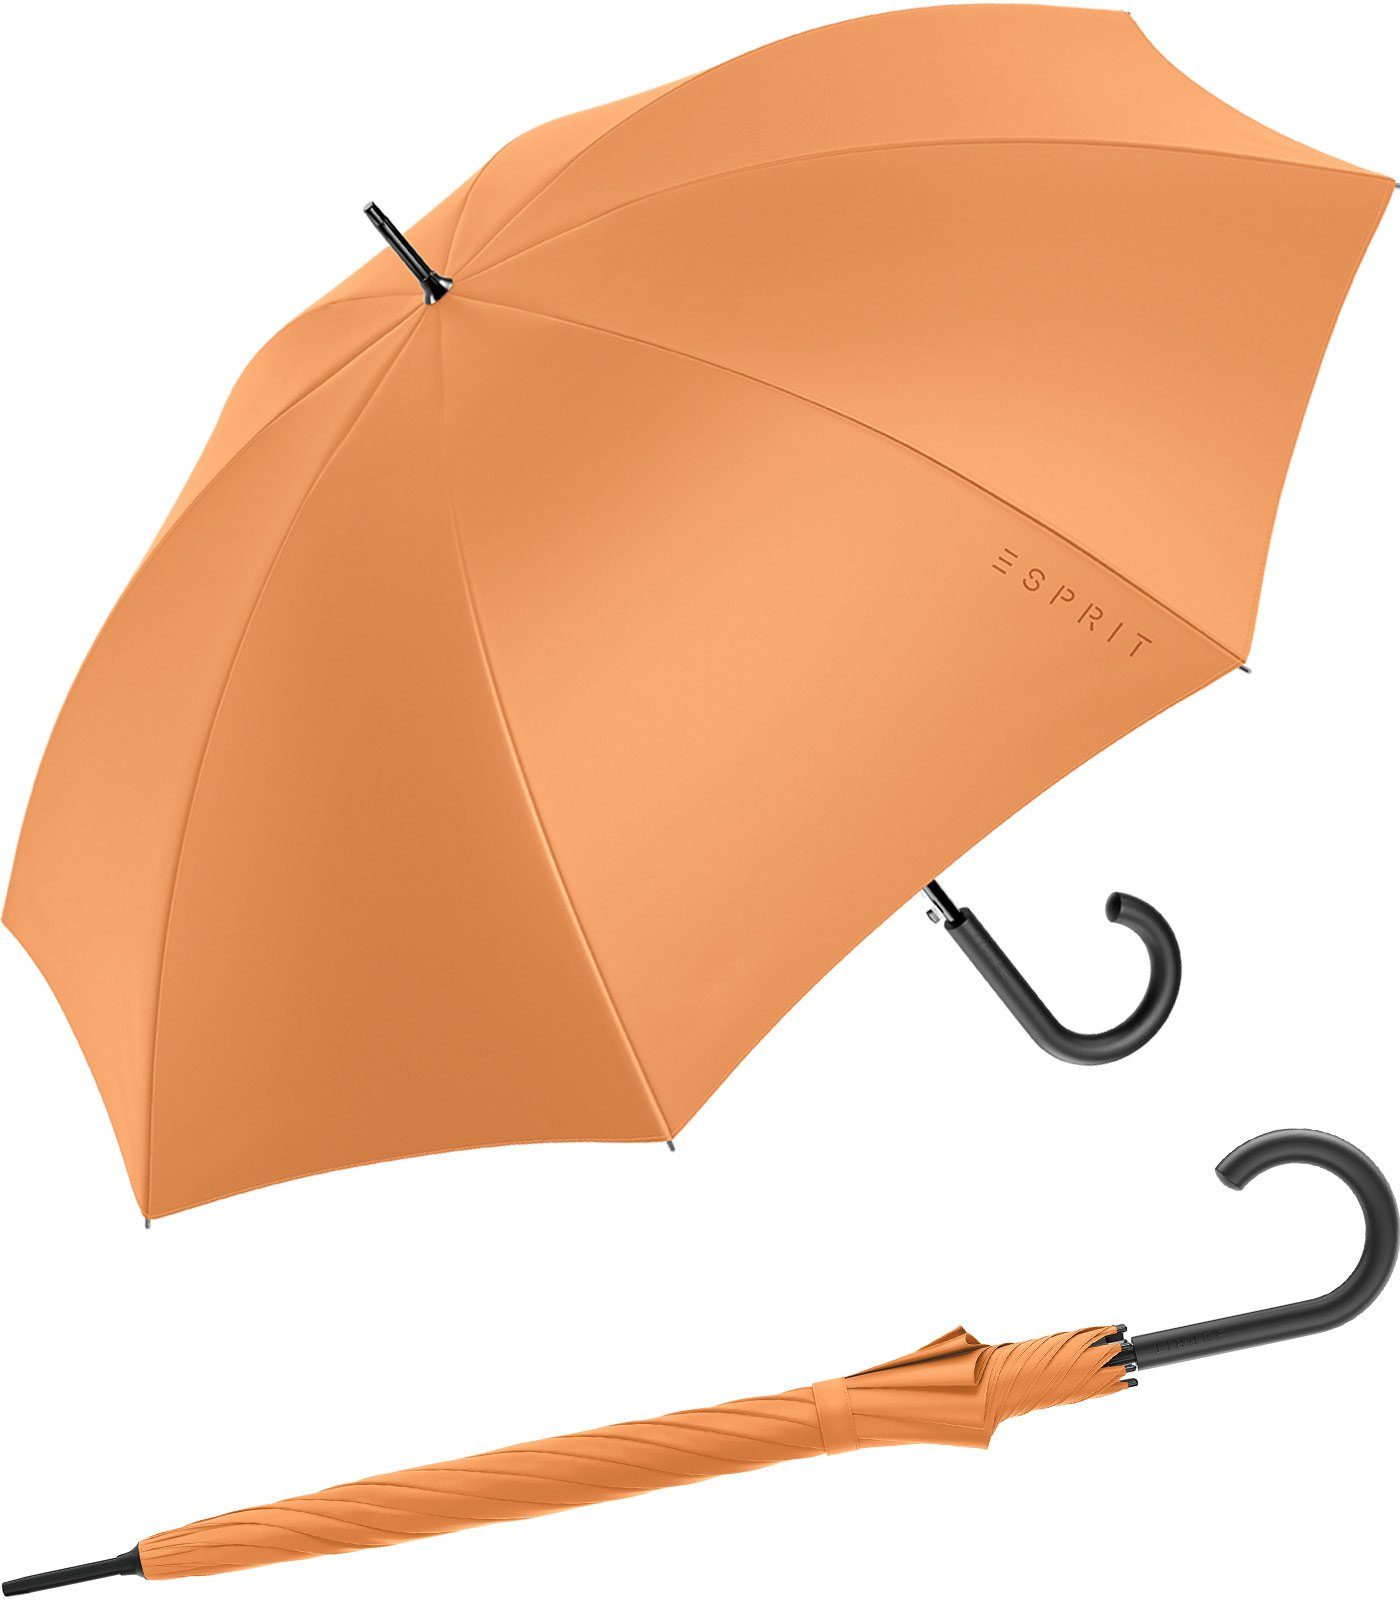 Esprit Langregenschirm Damen-Regenschirm mit Automatik FJ 2023, groß und stabil, in den Trendfarben orange